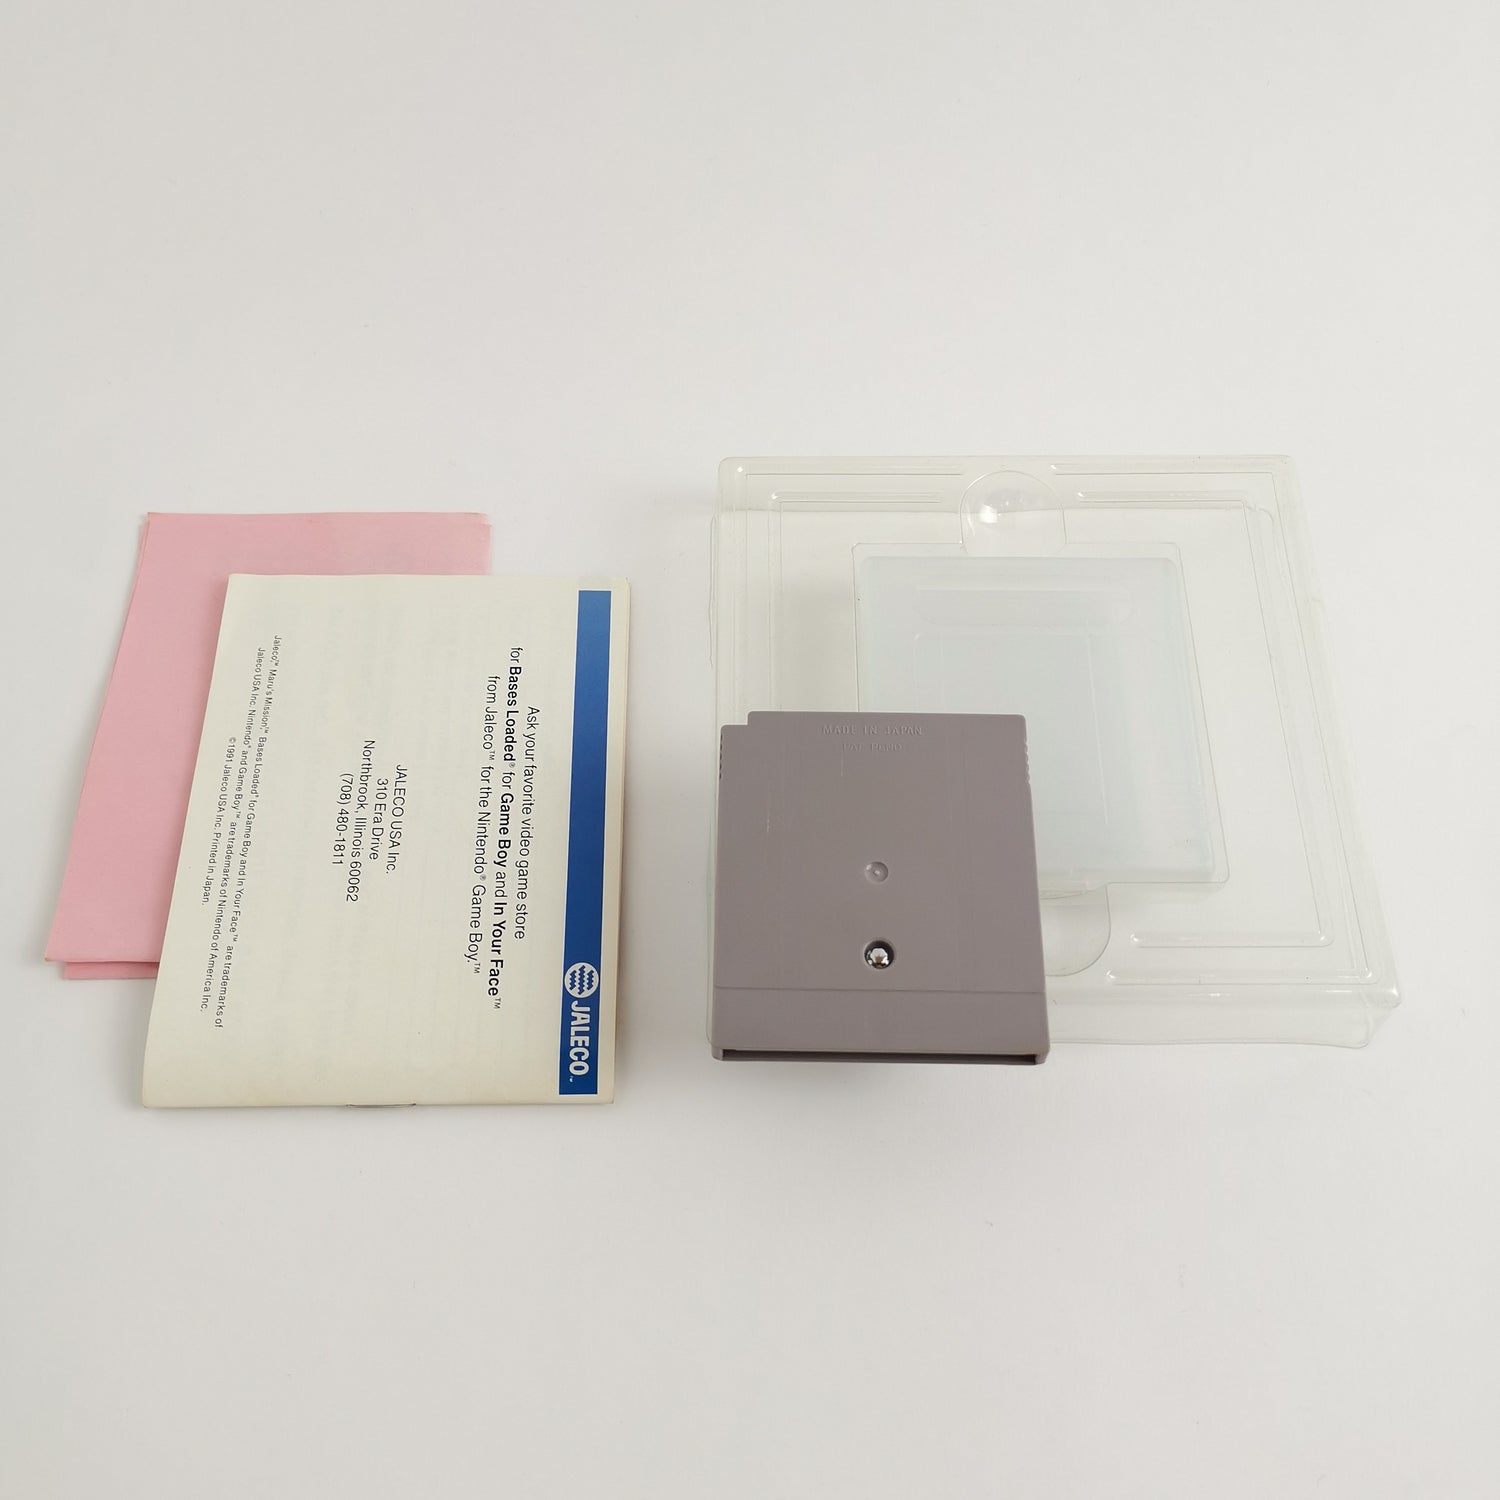 Nintendo Game Boy Classic Game: Maru's Mission (alternative original packaging - rare) USA